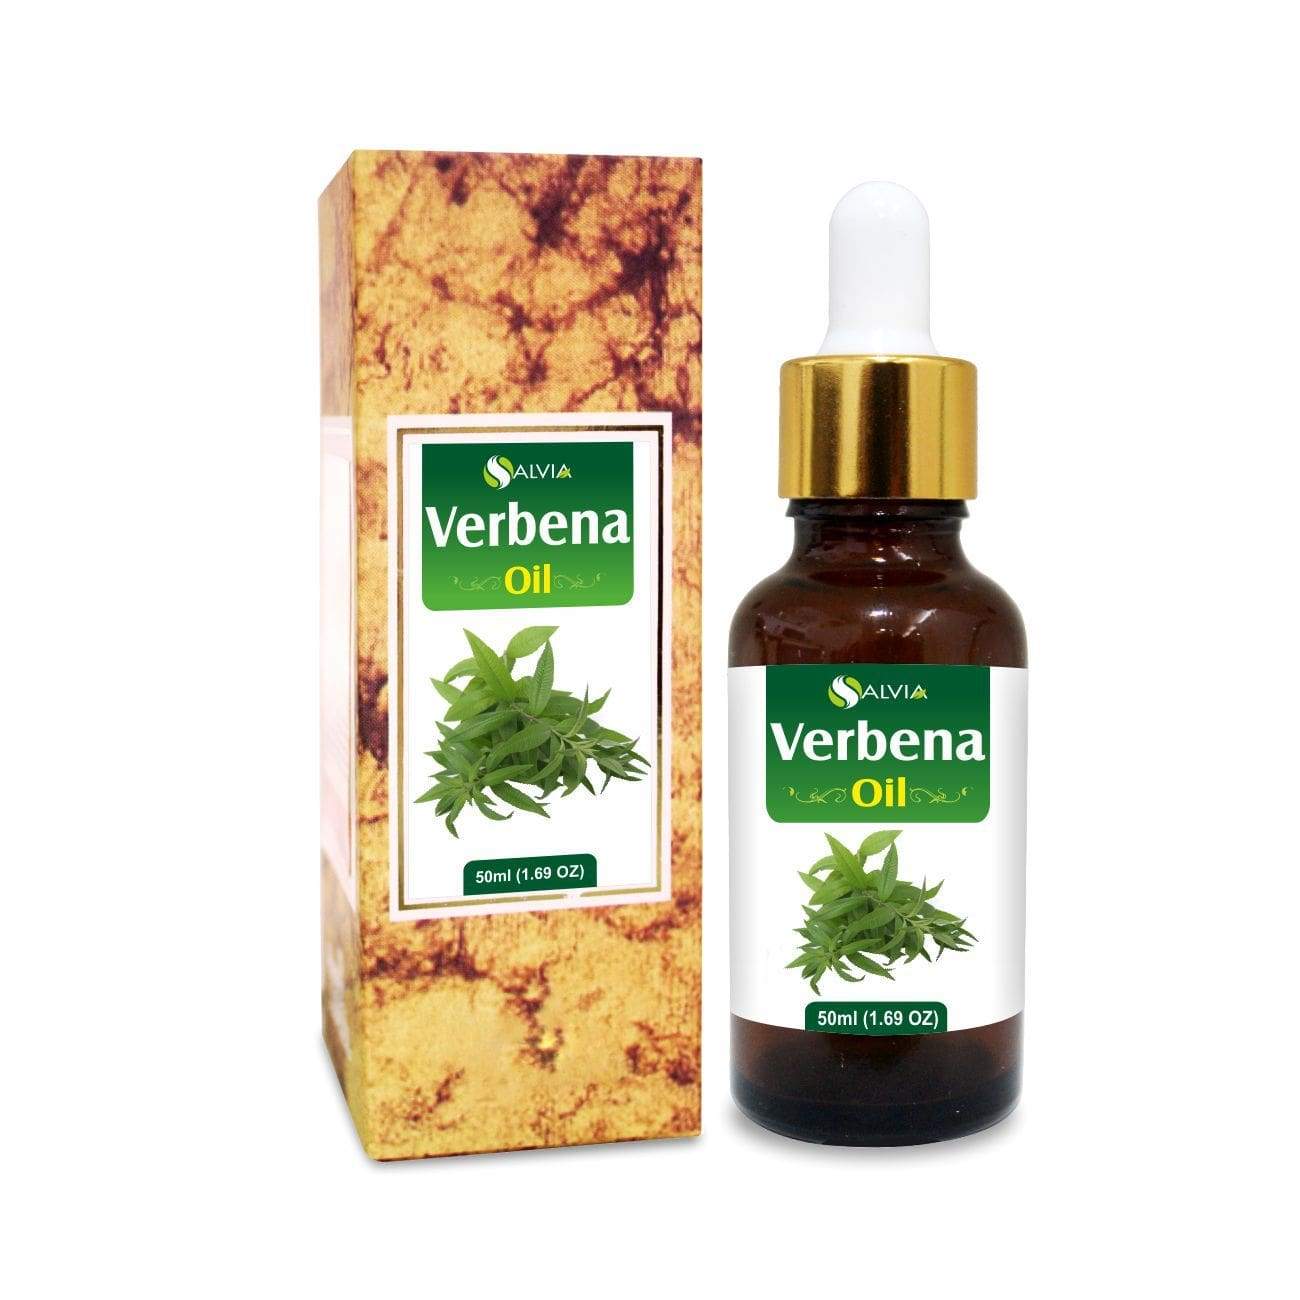 verbena oil for hair